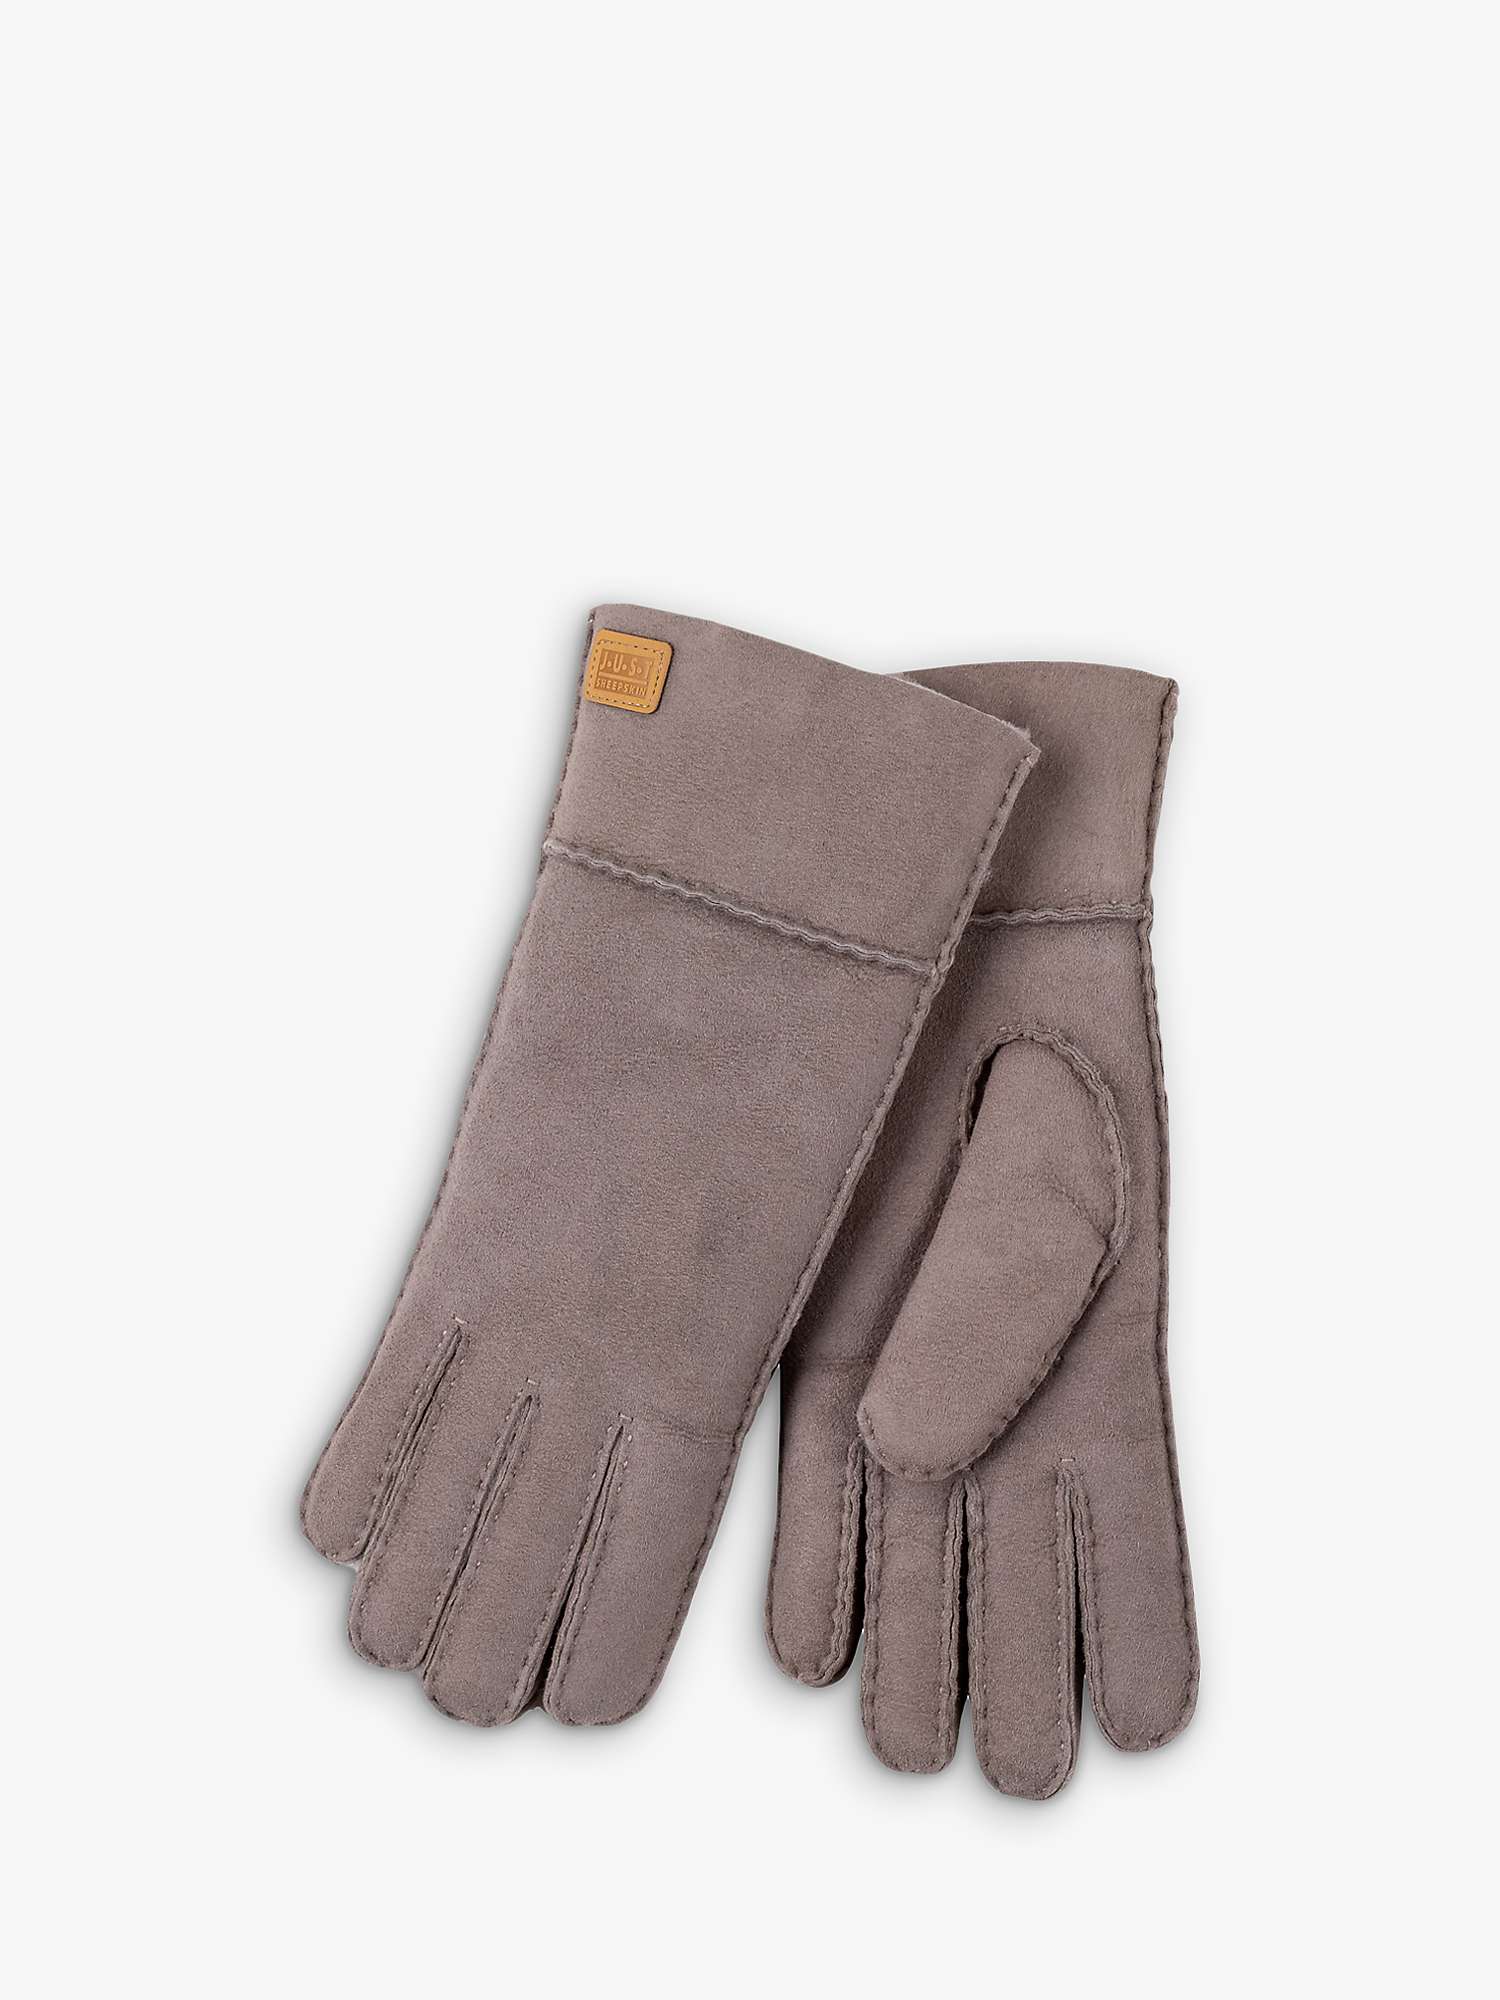 Buy Just Sheepskin Charlotte Sheepskin Gloves Online at johnlewis.com